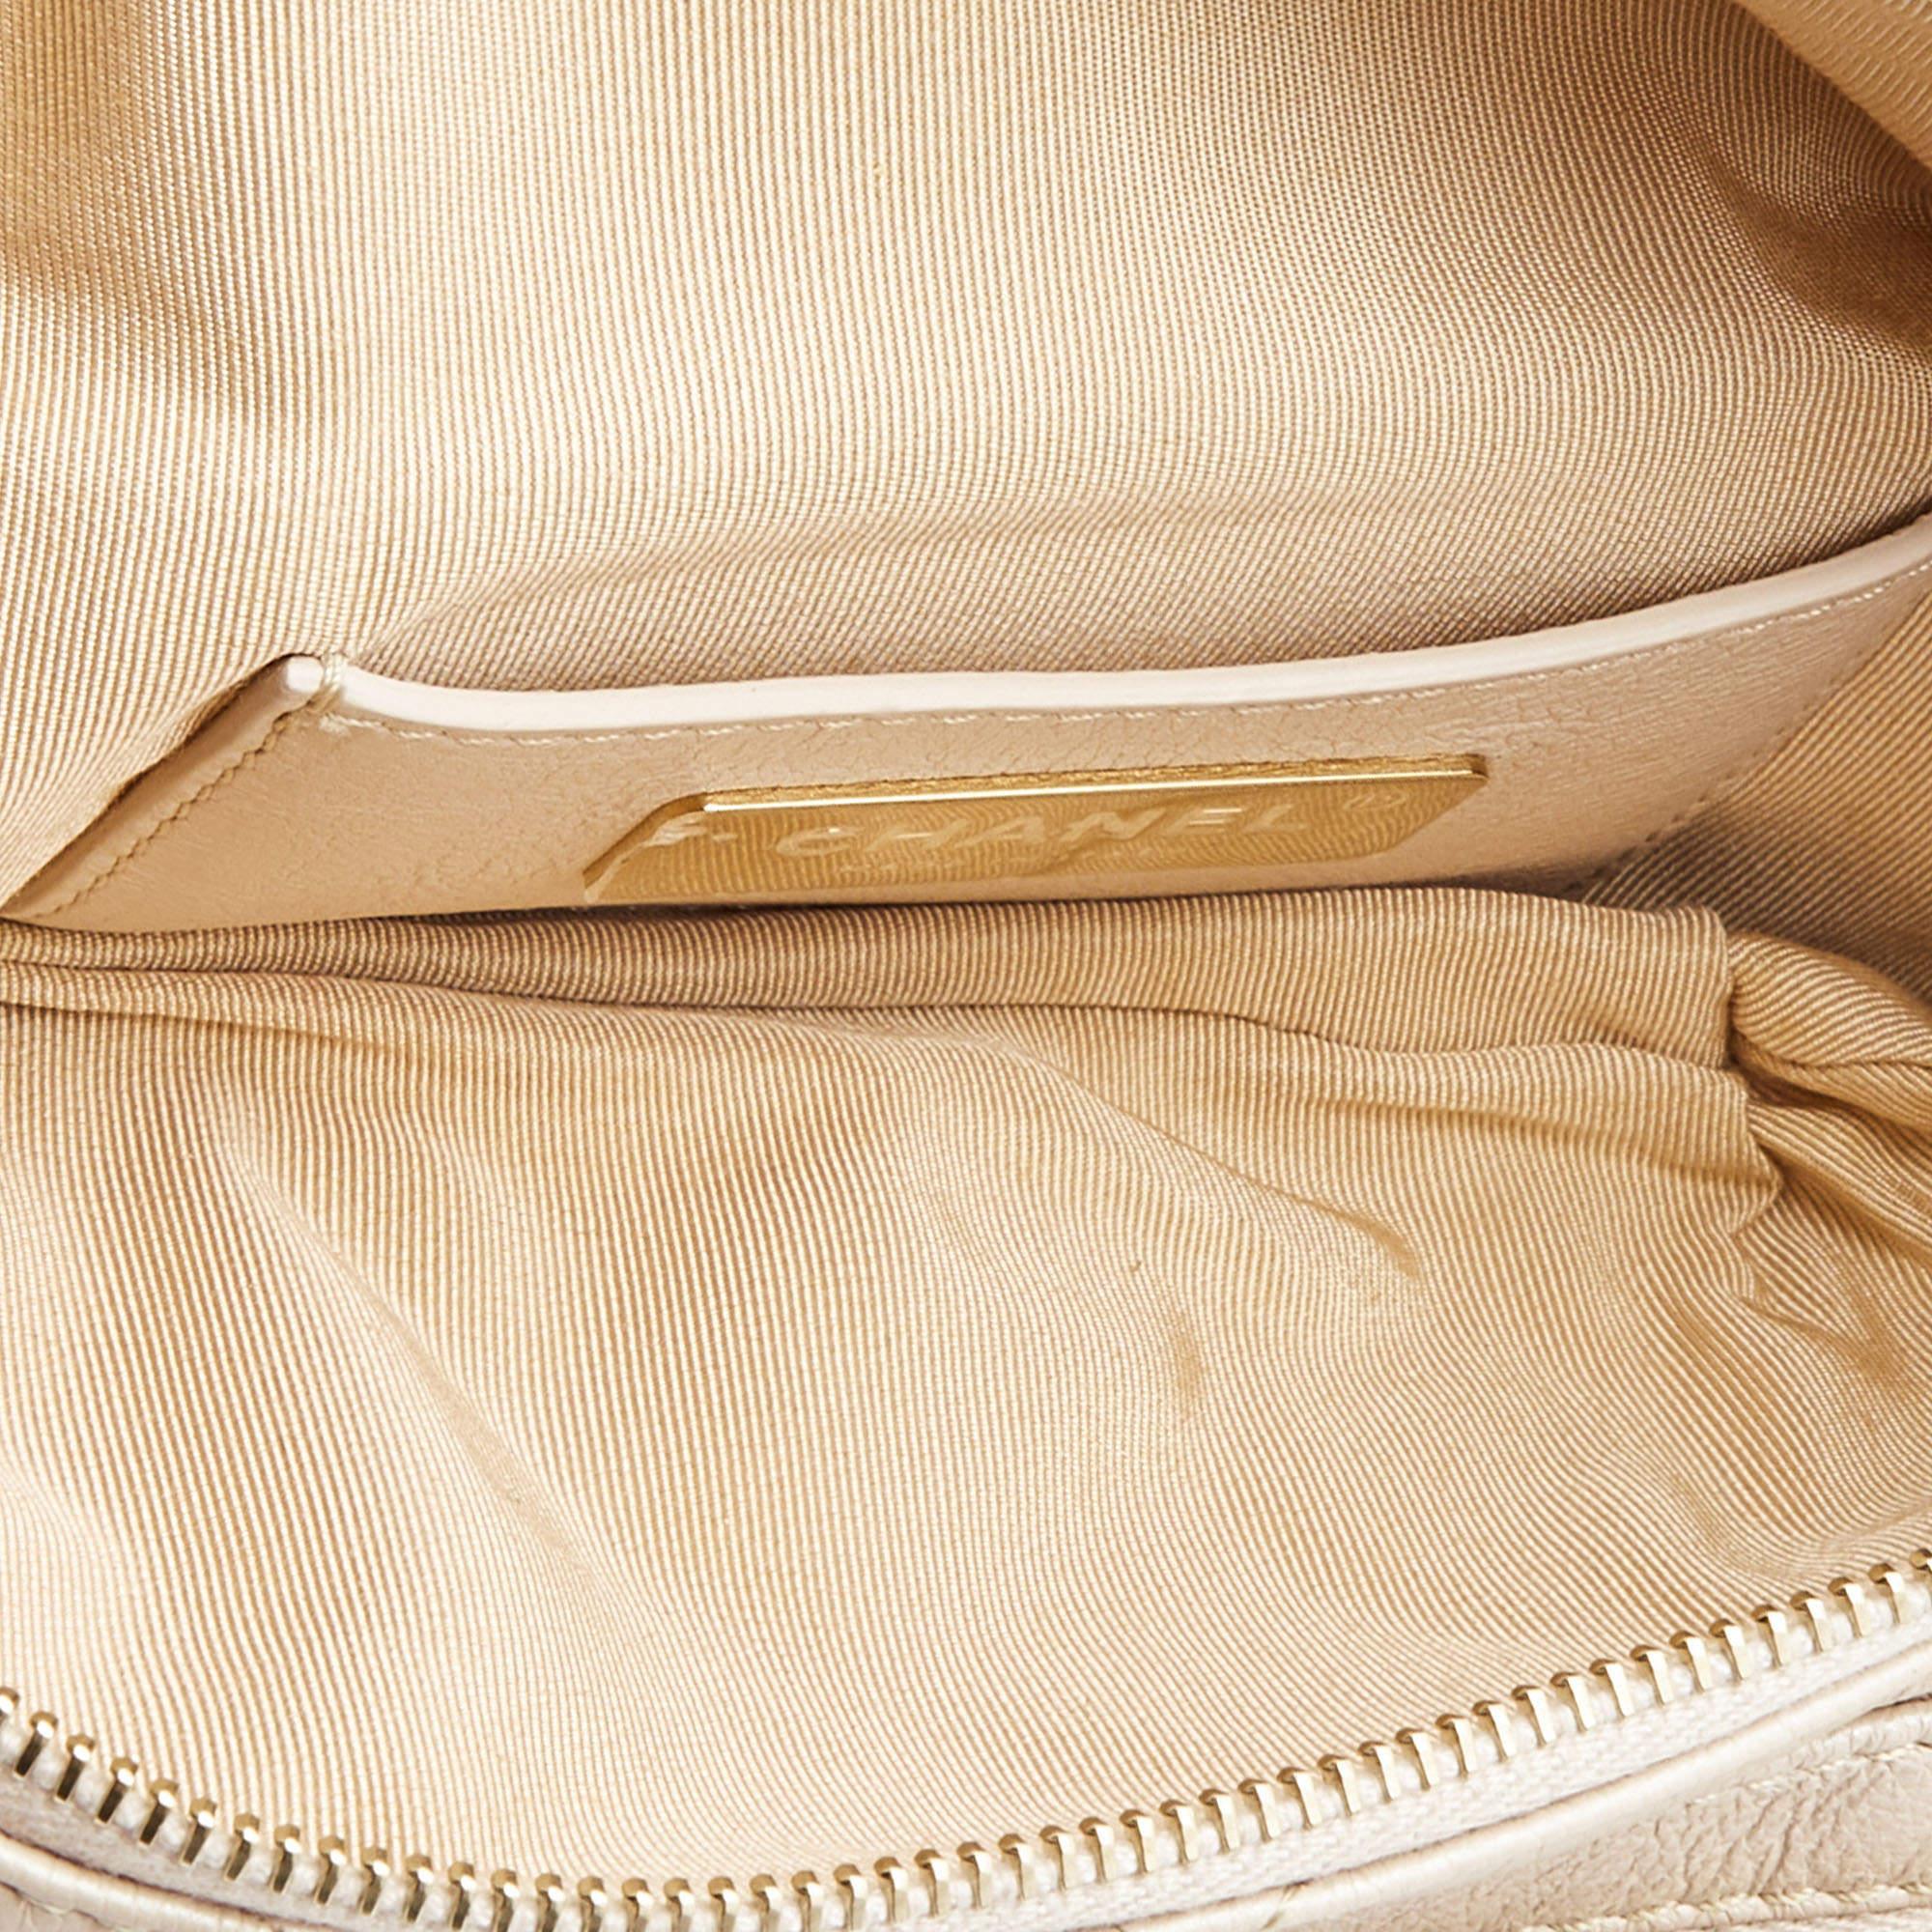 Chanel Beige Quilted Shimmer Leather Fanny Pack Waistbelt Bag 5